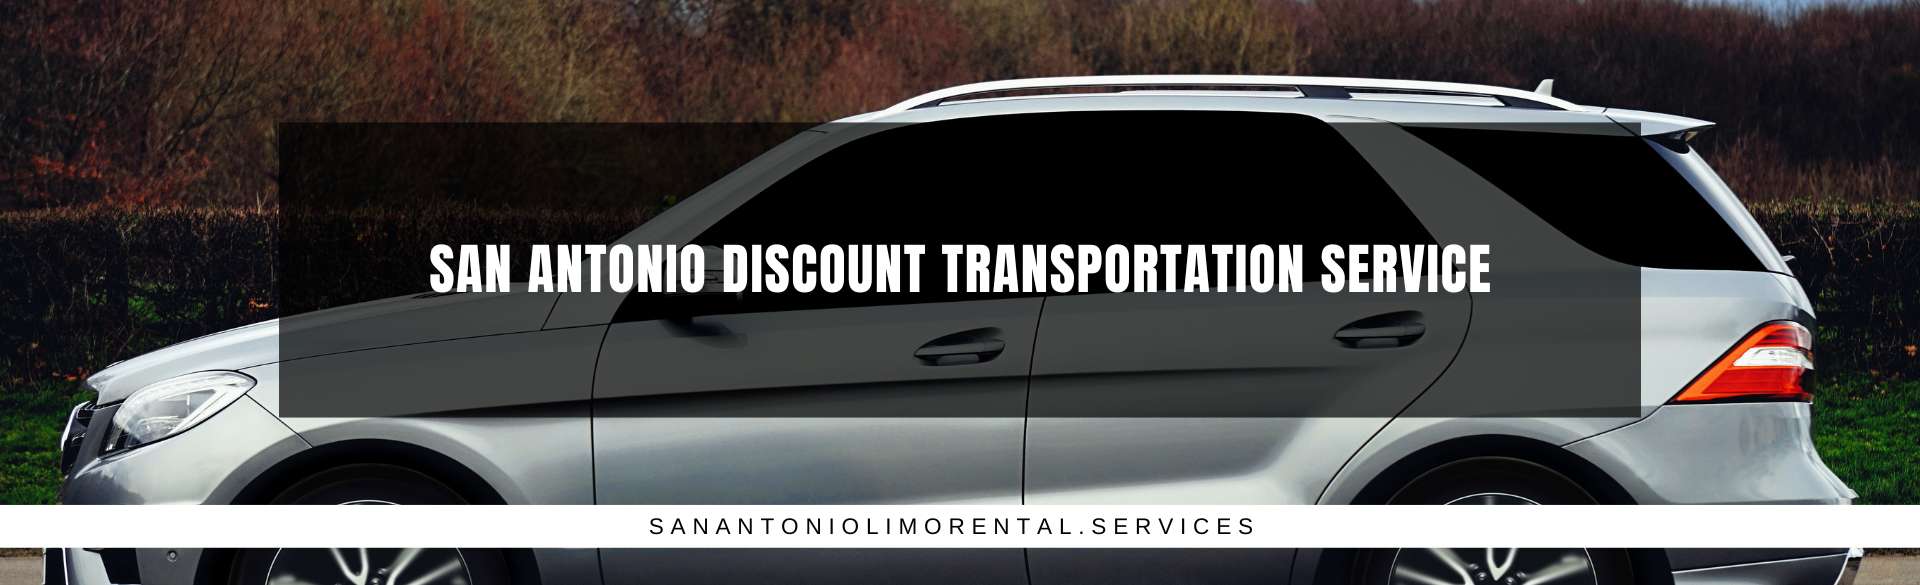 San Antonio Discount Transportation Service